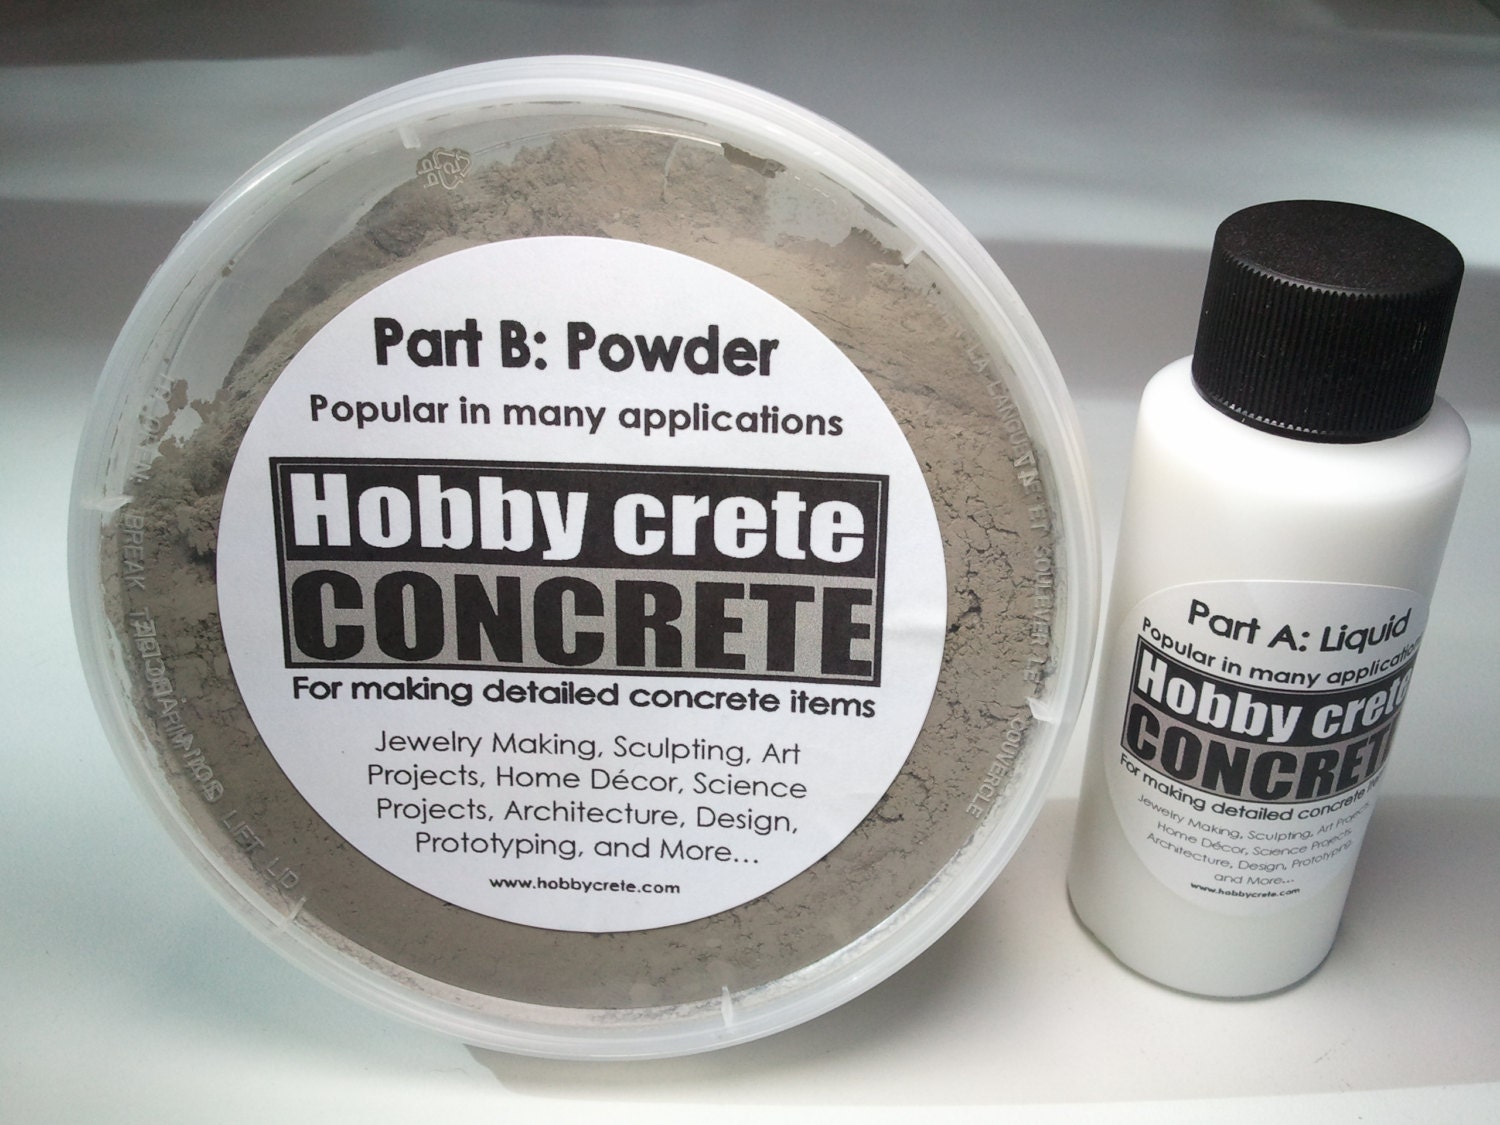 Hobbycrete concrete mix 9 oz. kit for making concrete jewelry